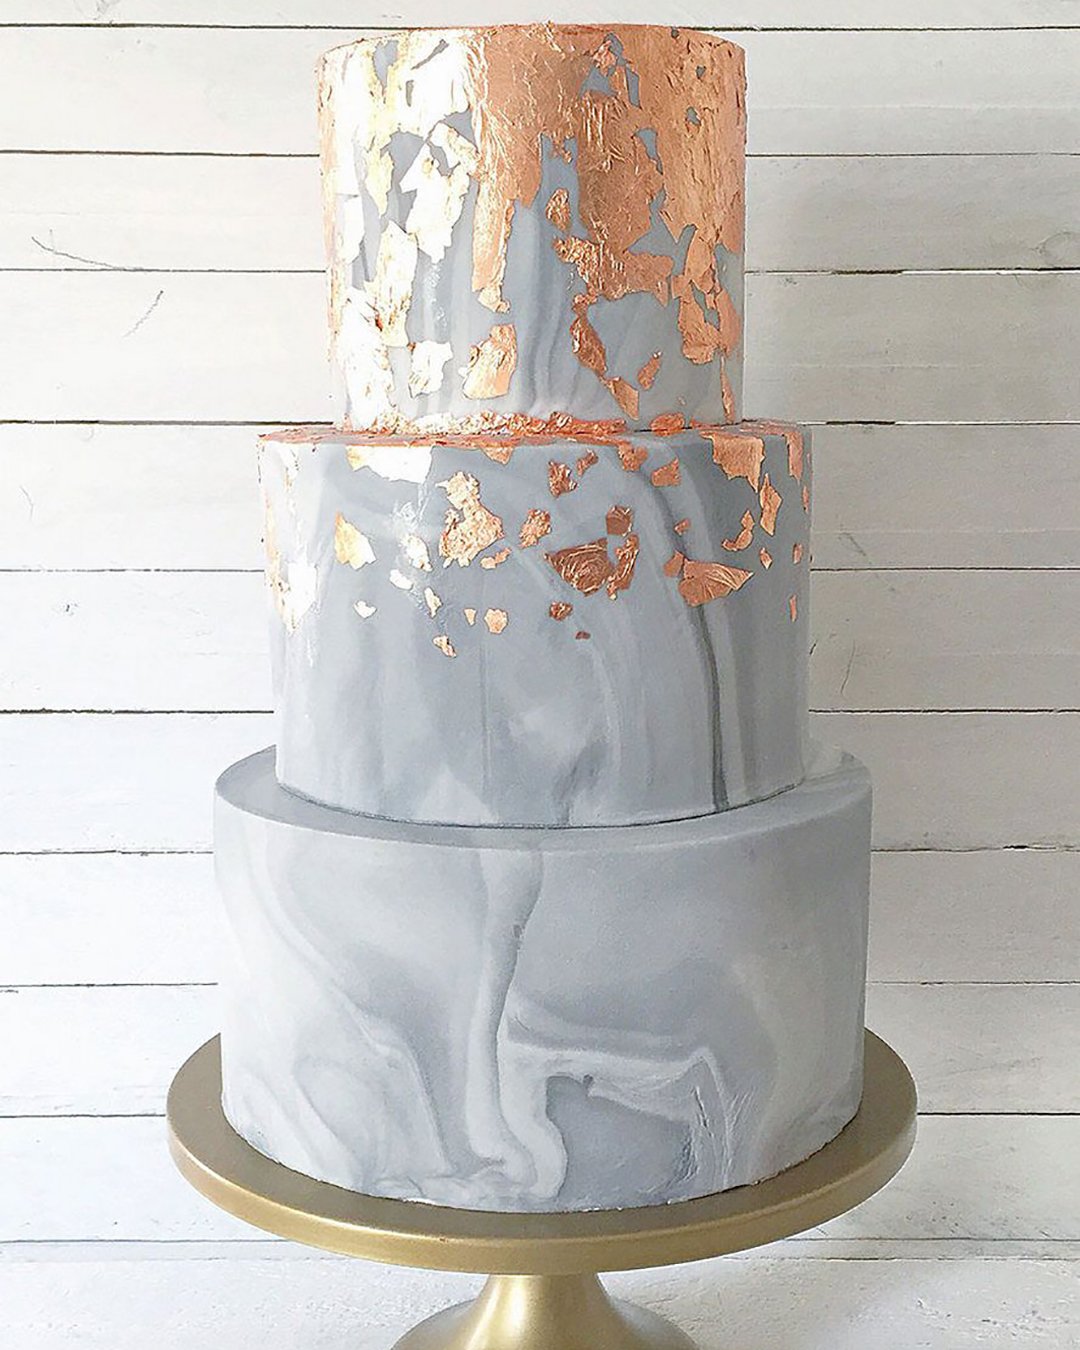 marble wedding cakes three tiered dark cake with golden divorces on a golden plate wedspire via instagram